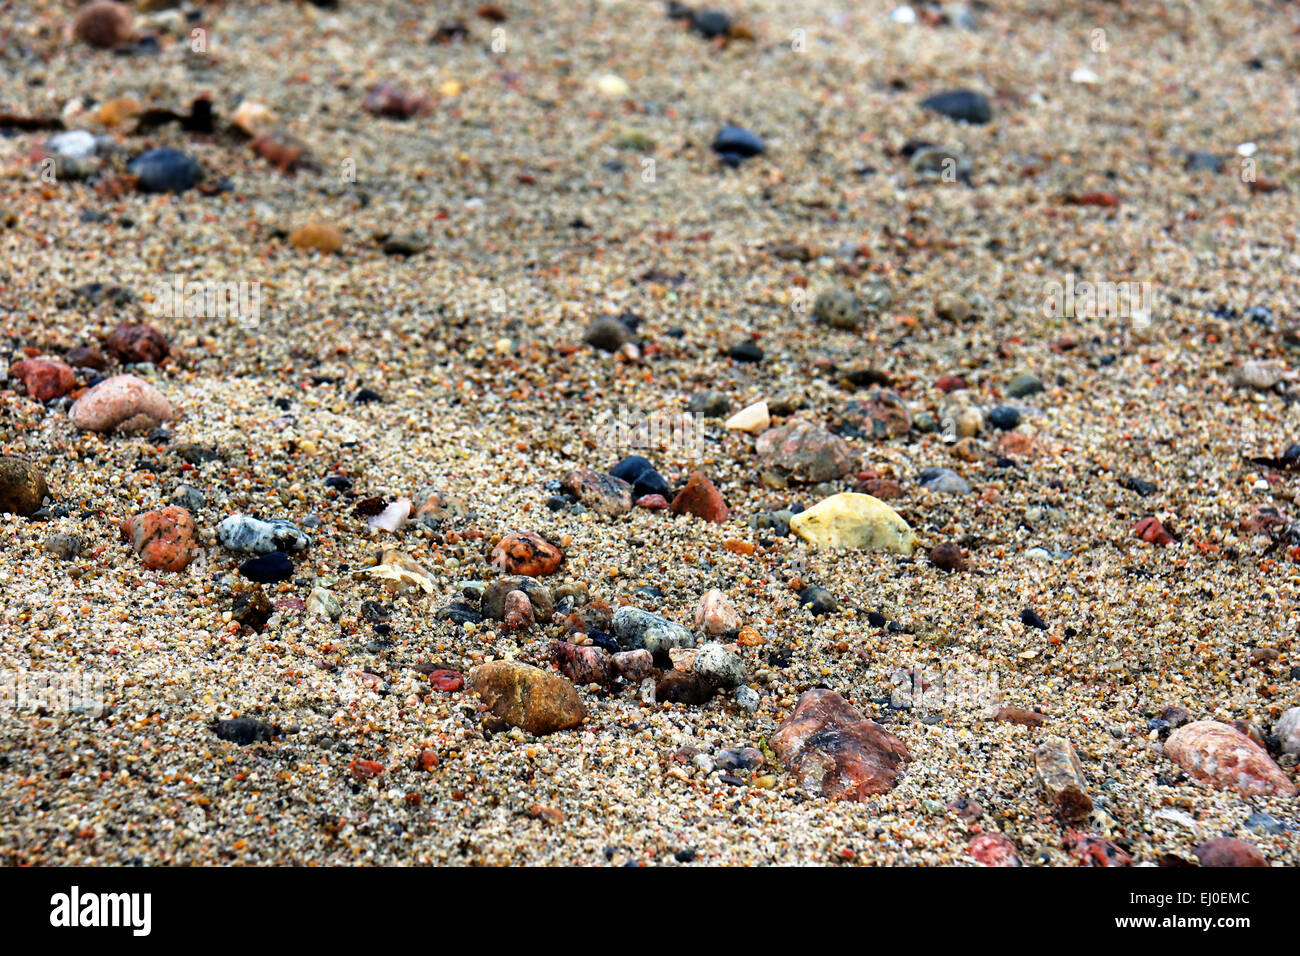 Wet sand and rocks on a beach, closeup, shallow DOF Stock Photo